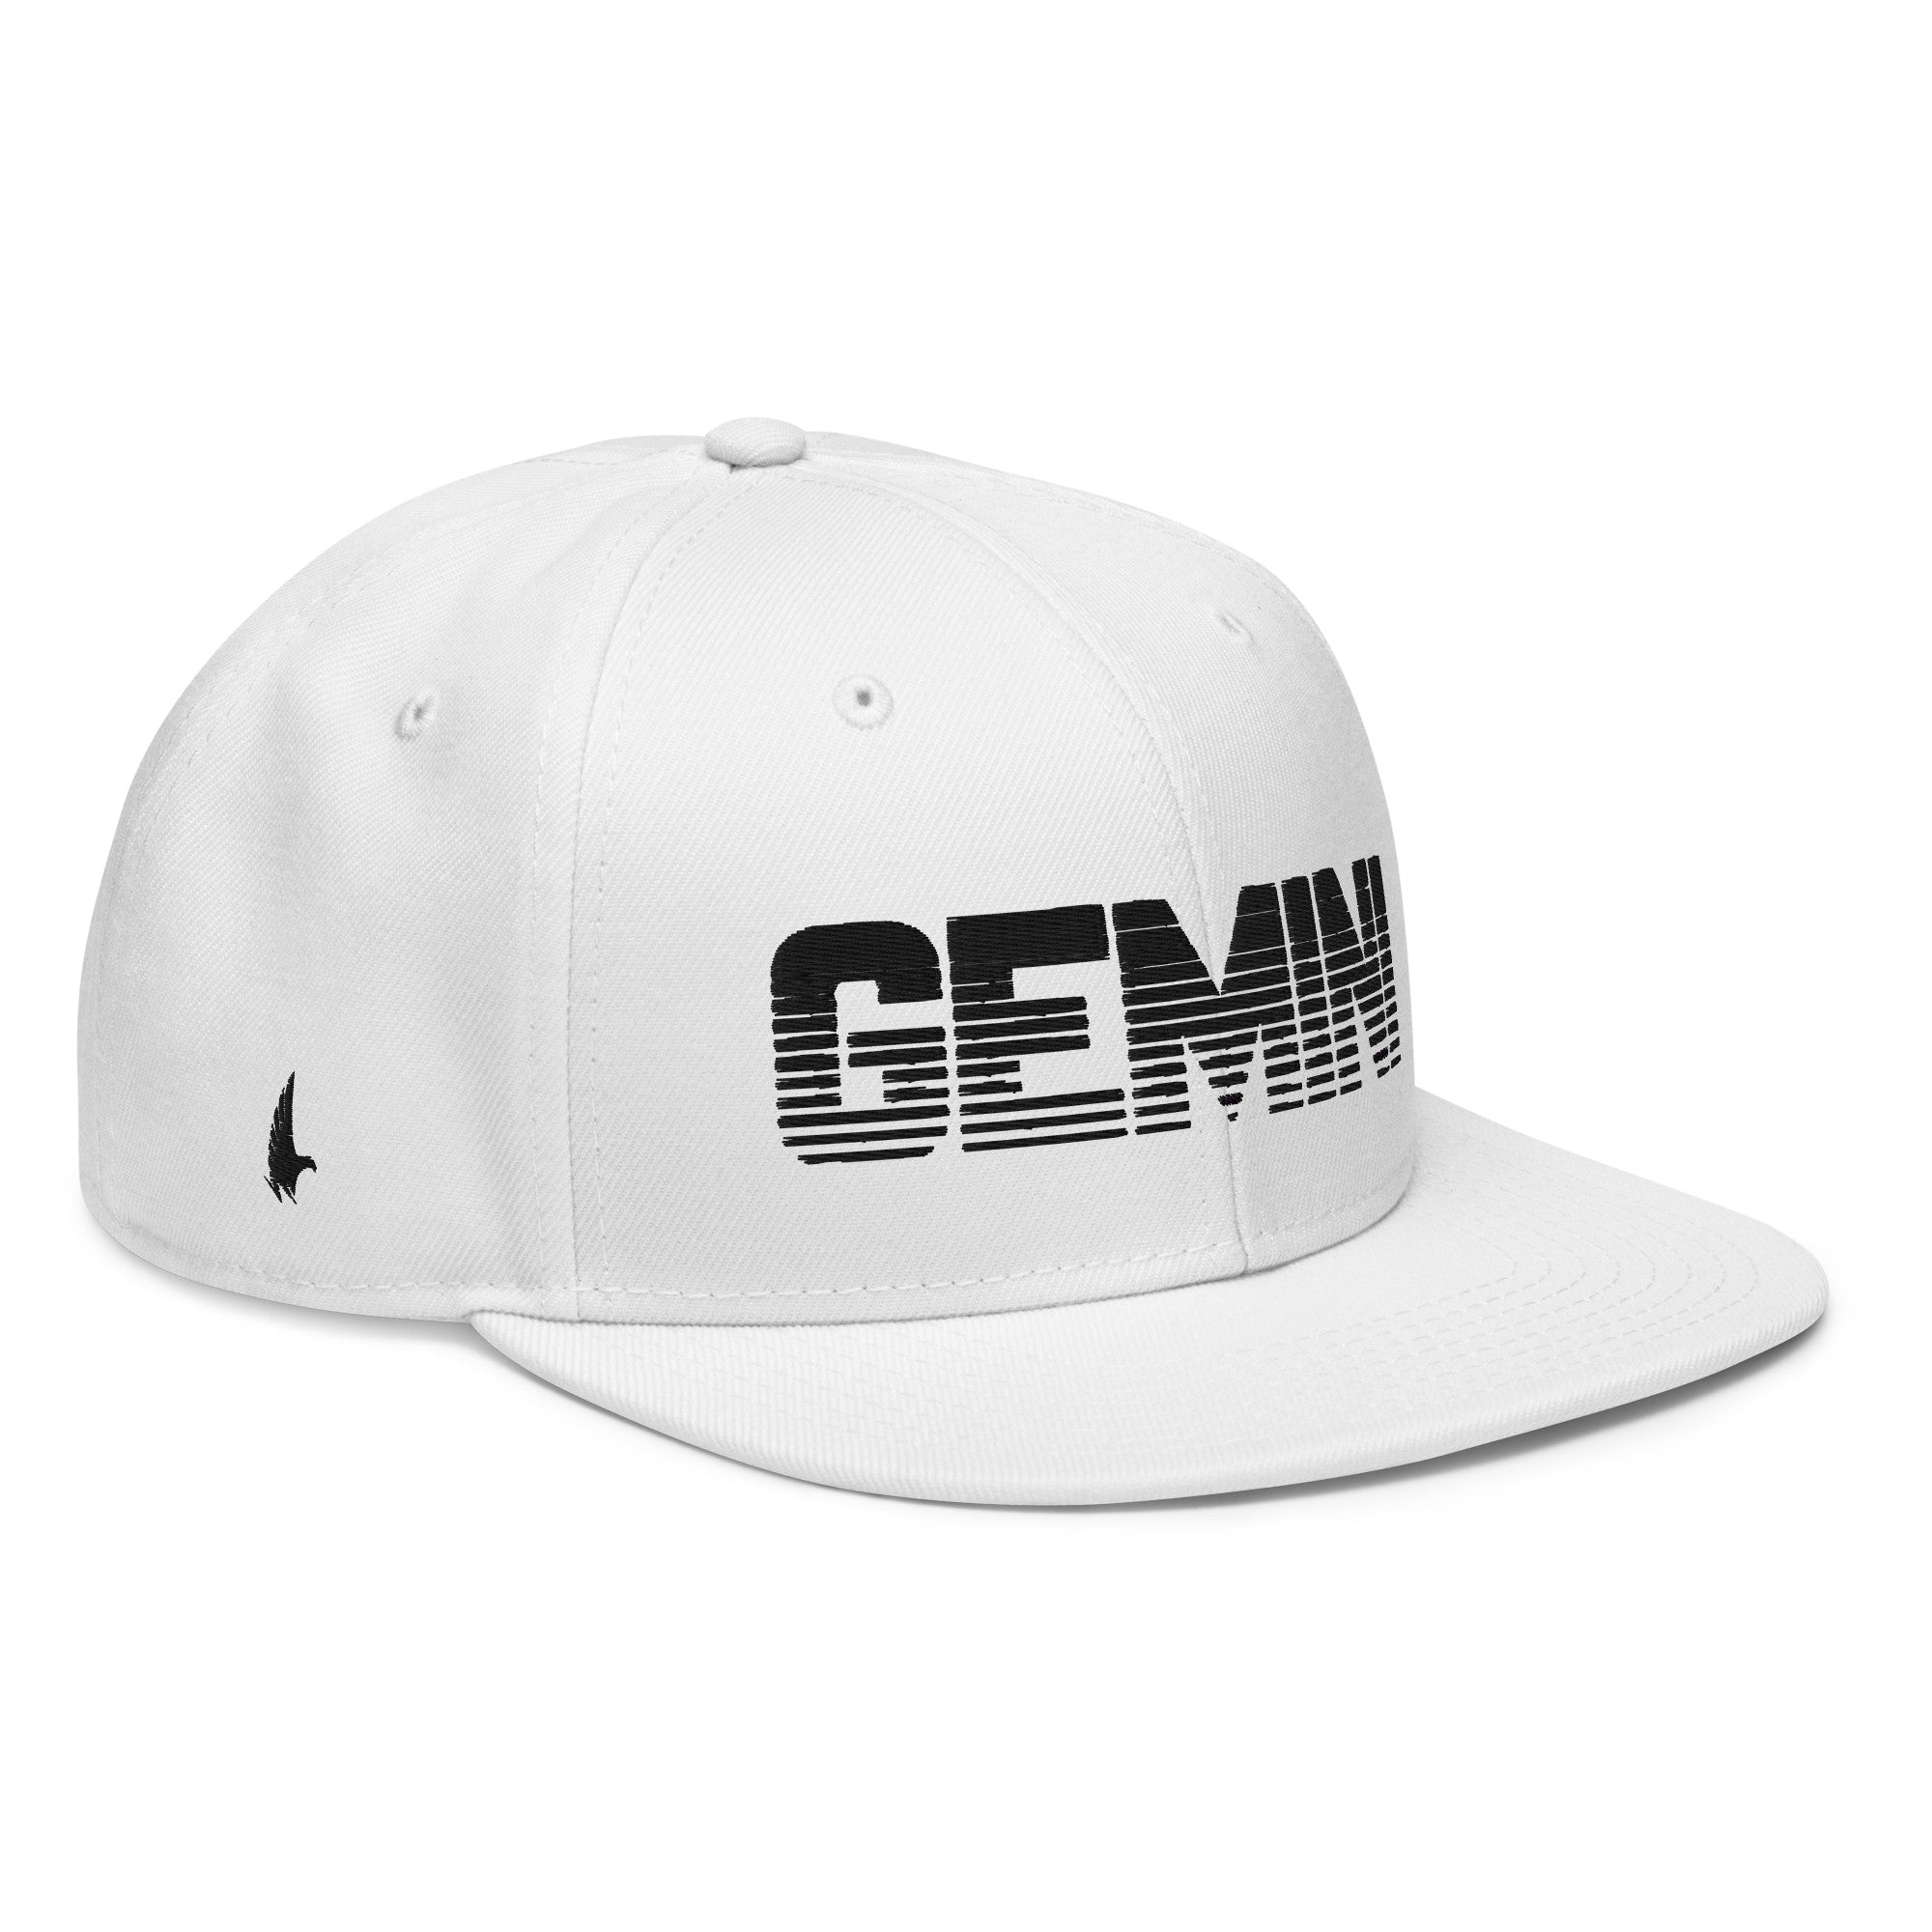 Gemini Snapback Hat - White / Black - Loyalty Vibes